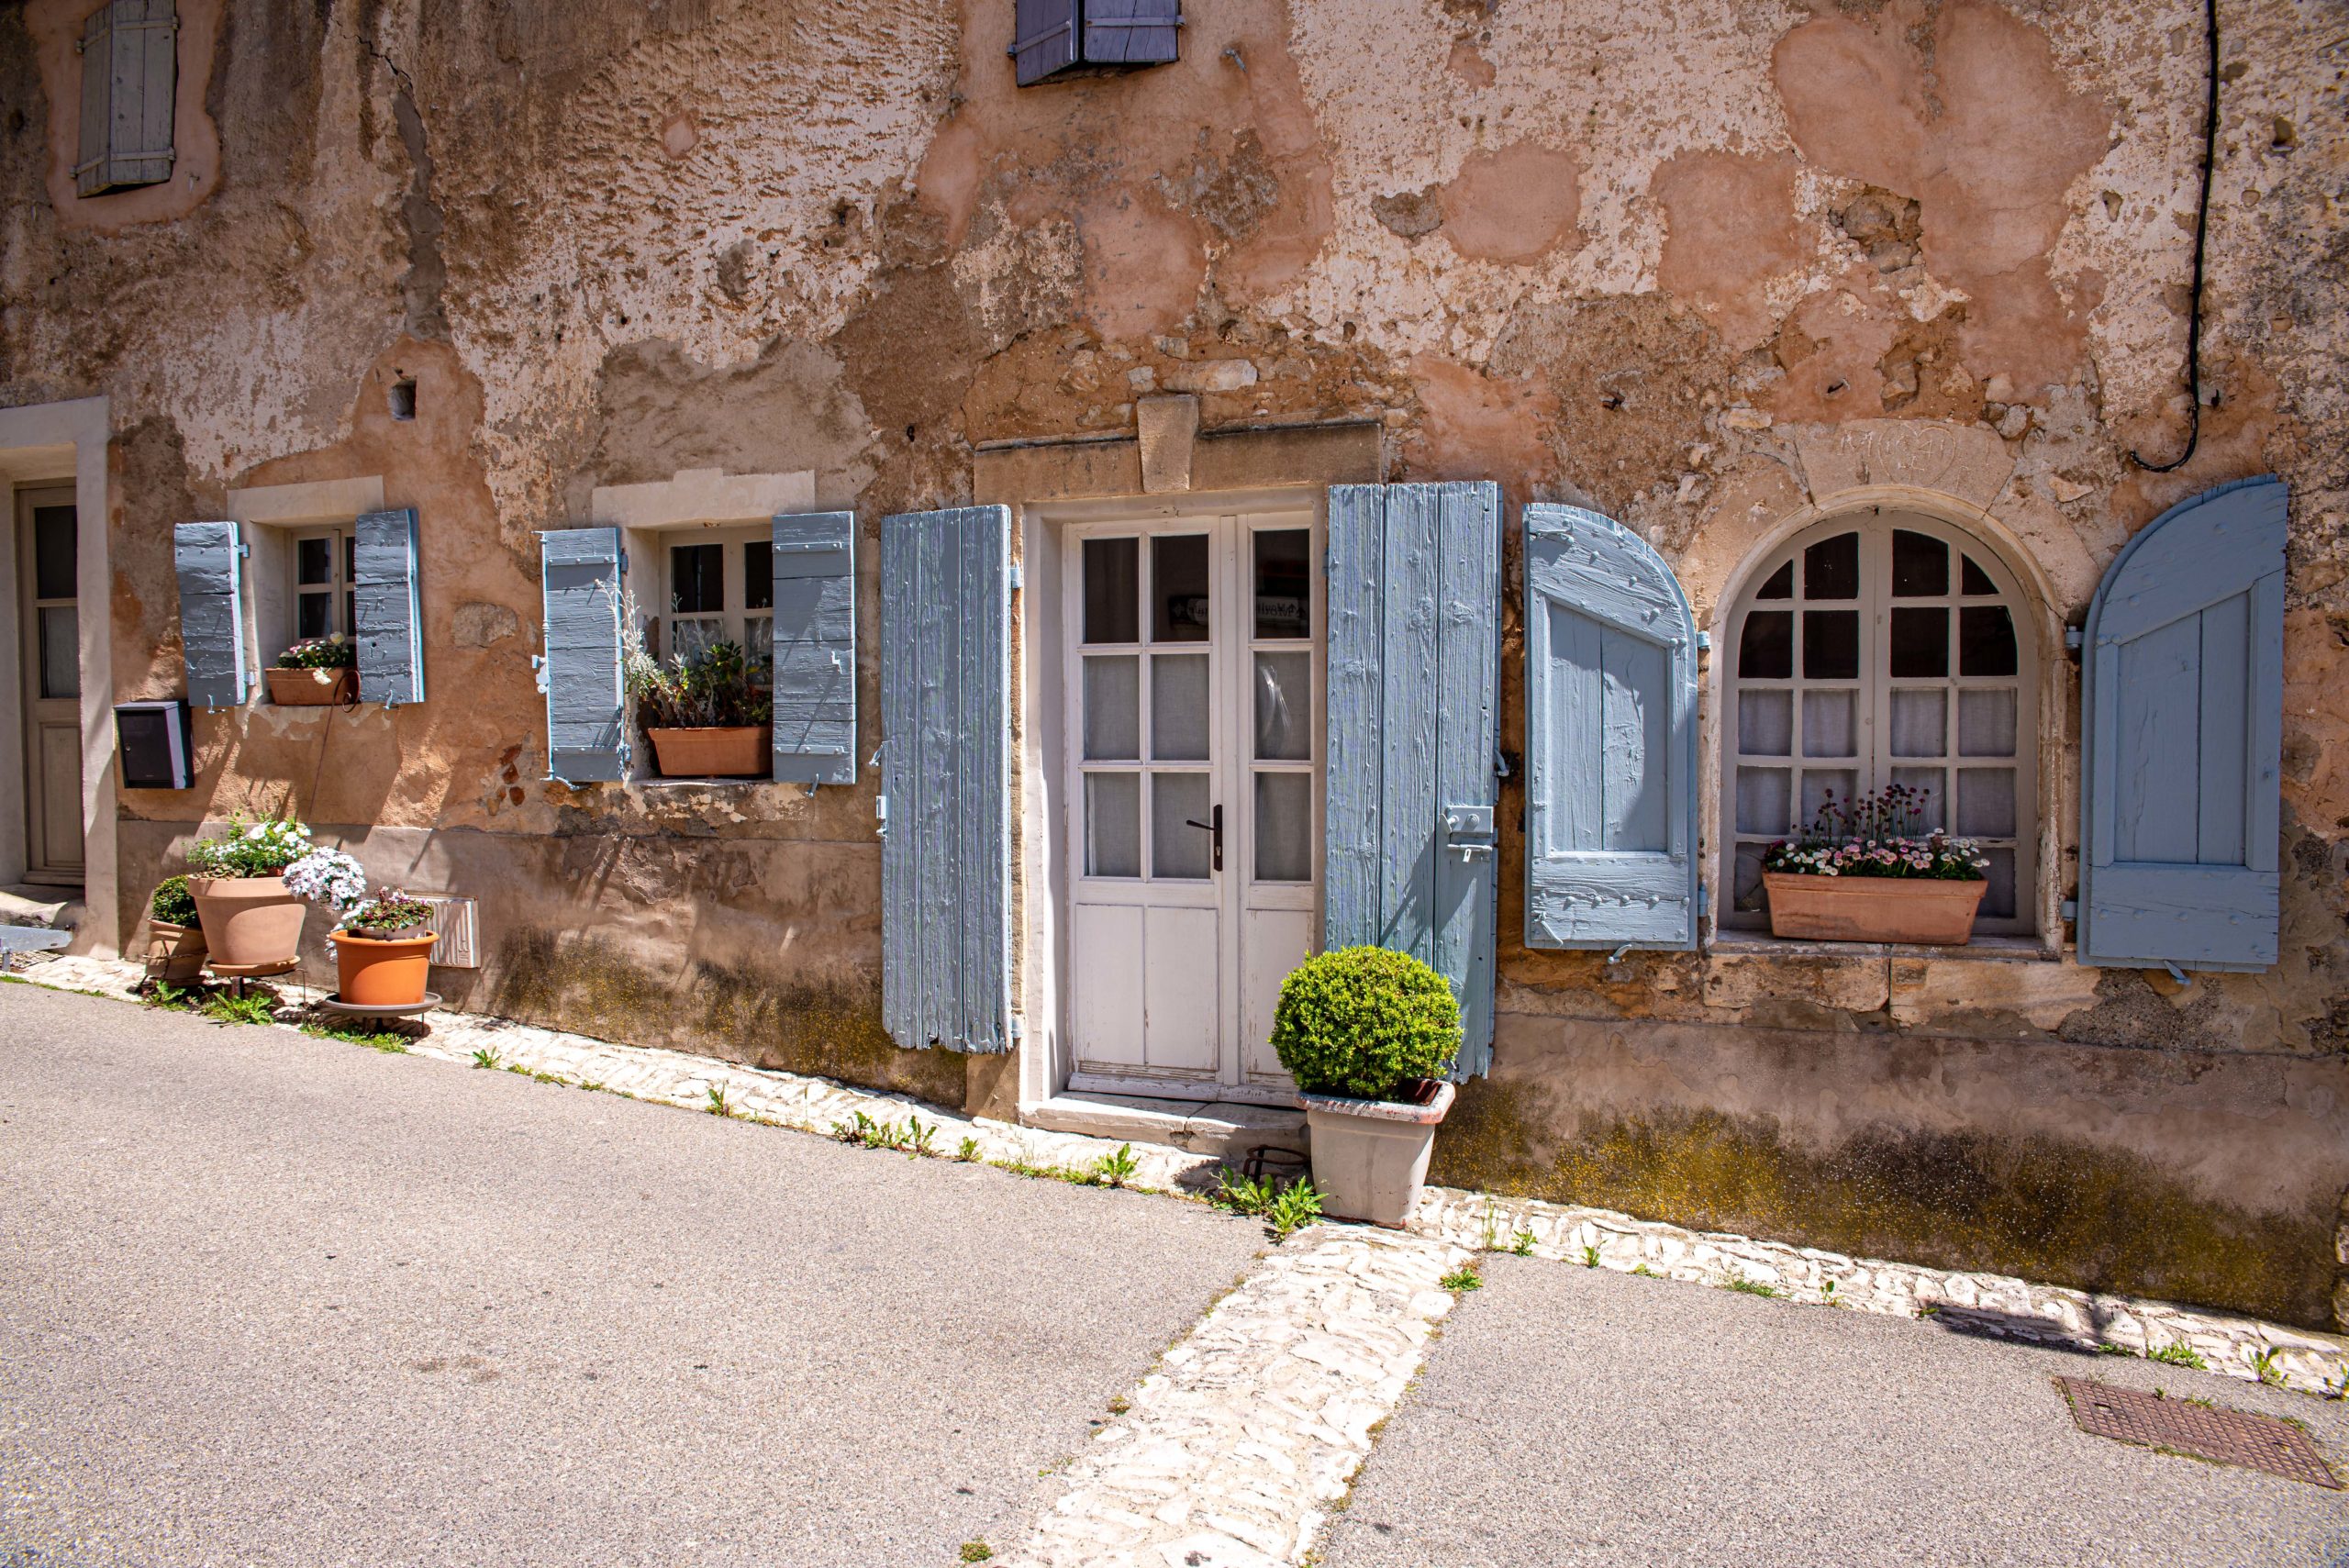 Blog de voyage en France une semaine de vacances passage Rustrel